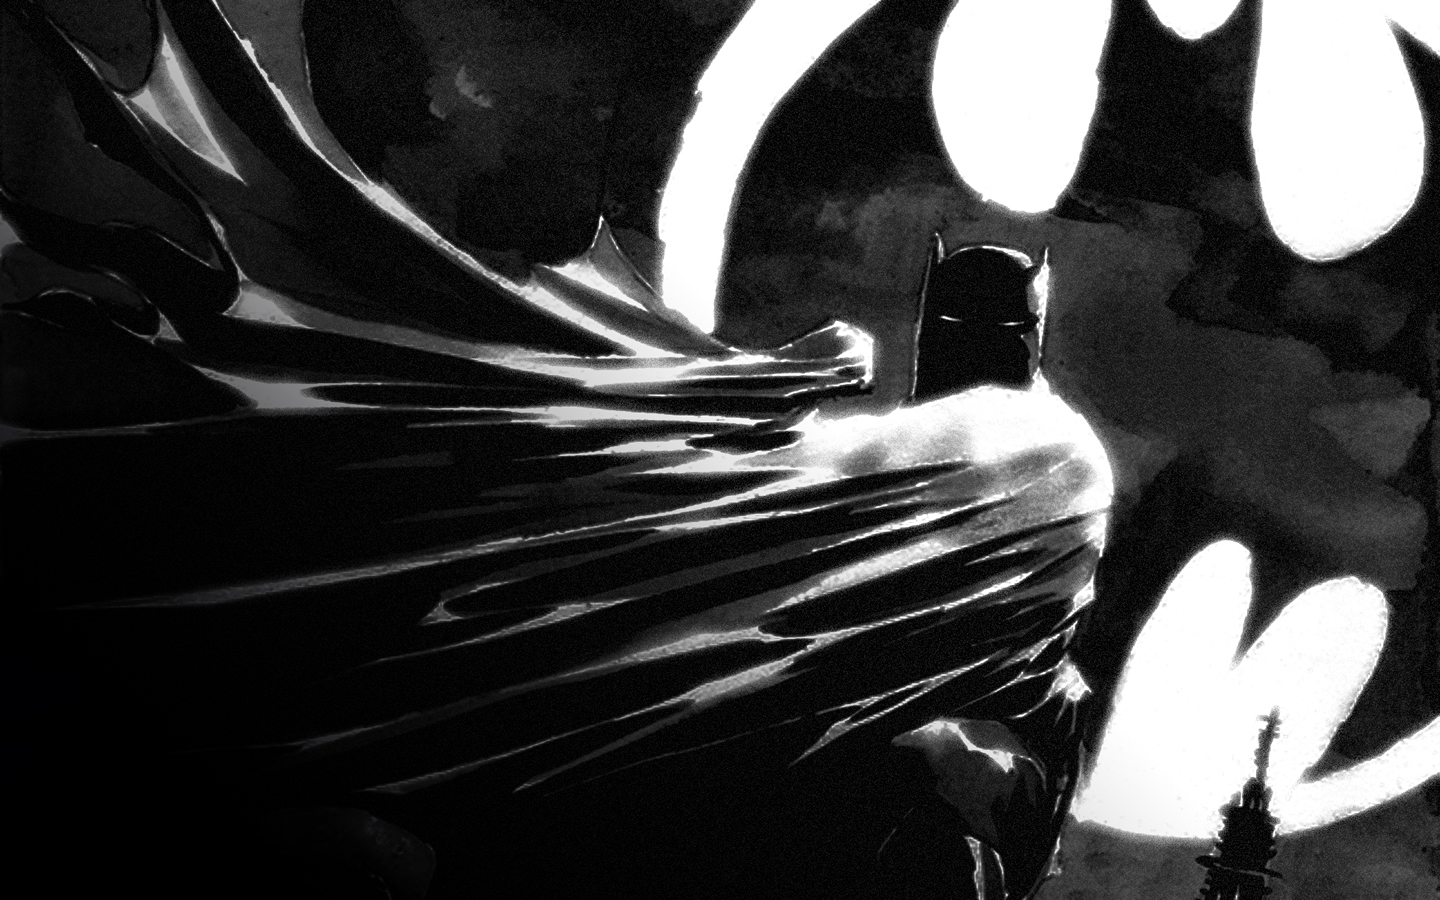 Batman Vs Superman Logo Movies Wallpaper HD High